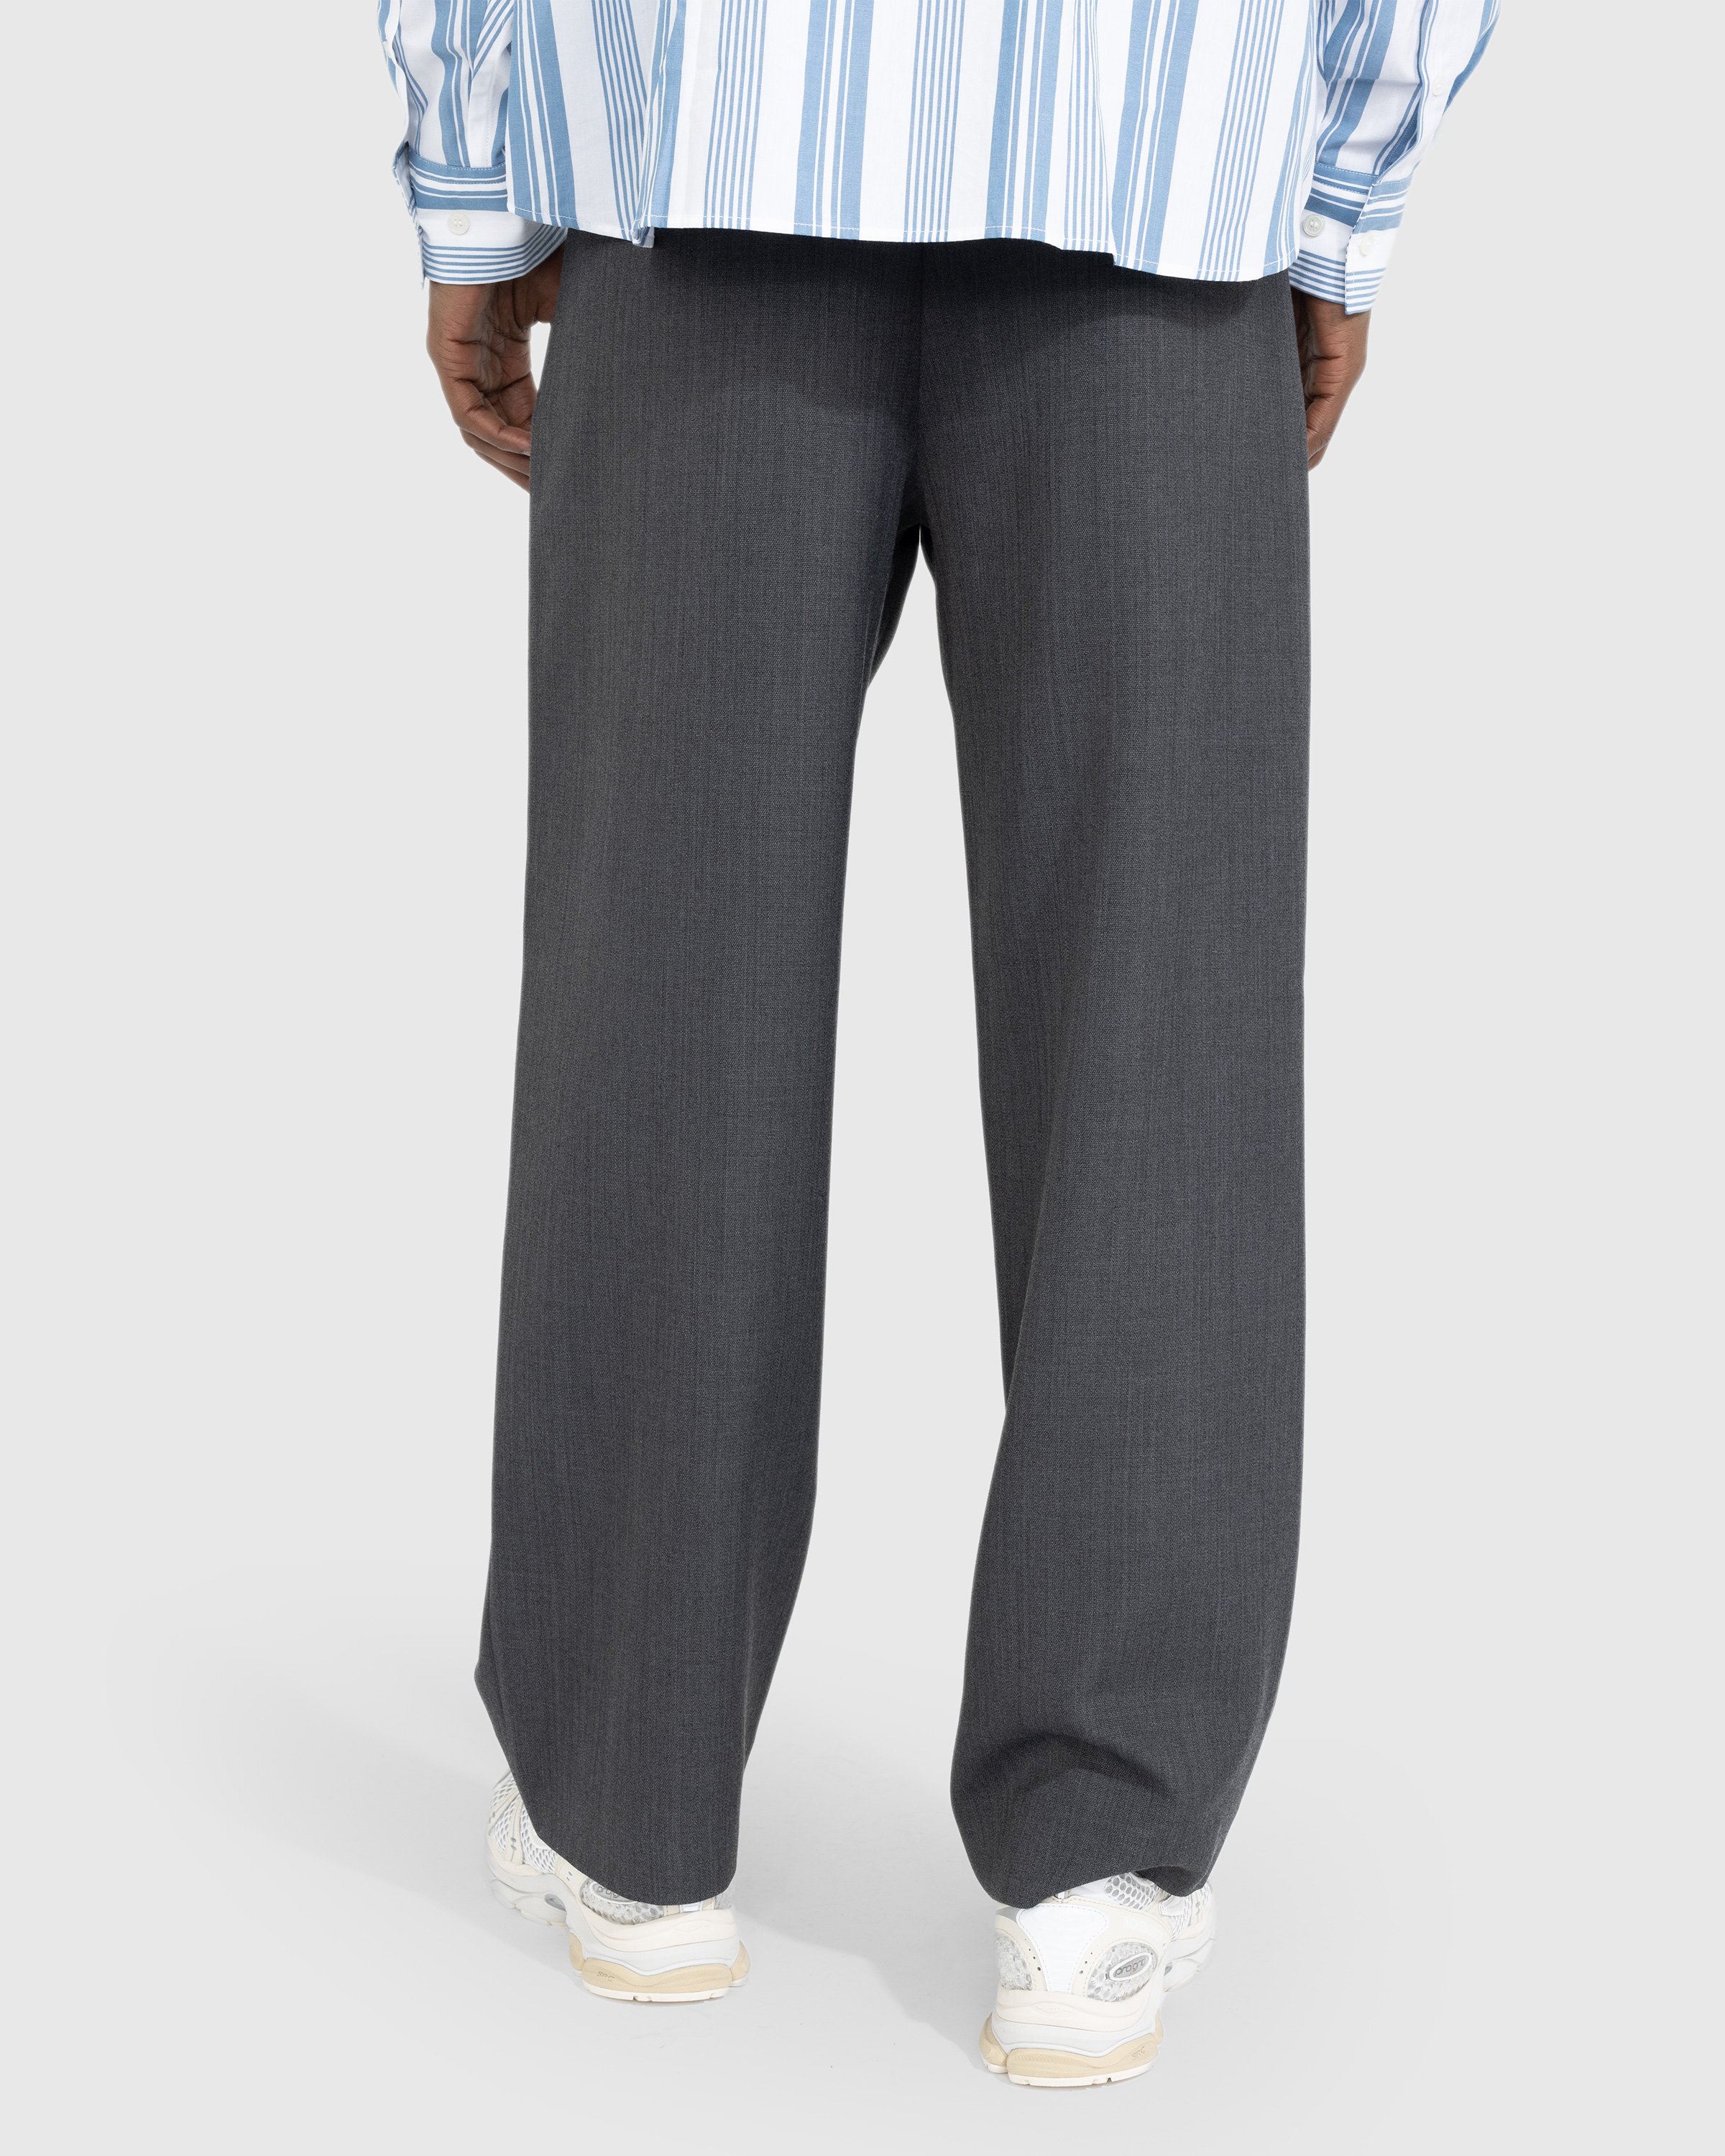 Acne Studios - Wool Blend Tailored Trousers Dark Grey Melange - Clothing - Grey - Image 3